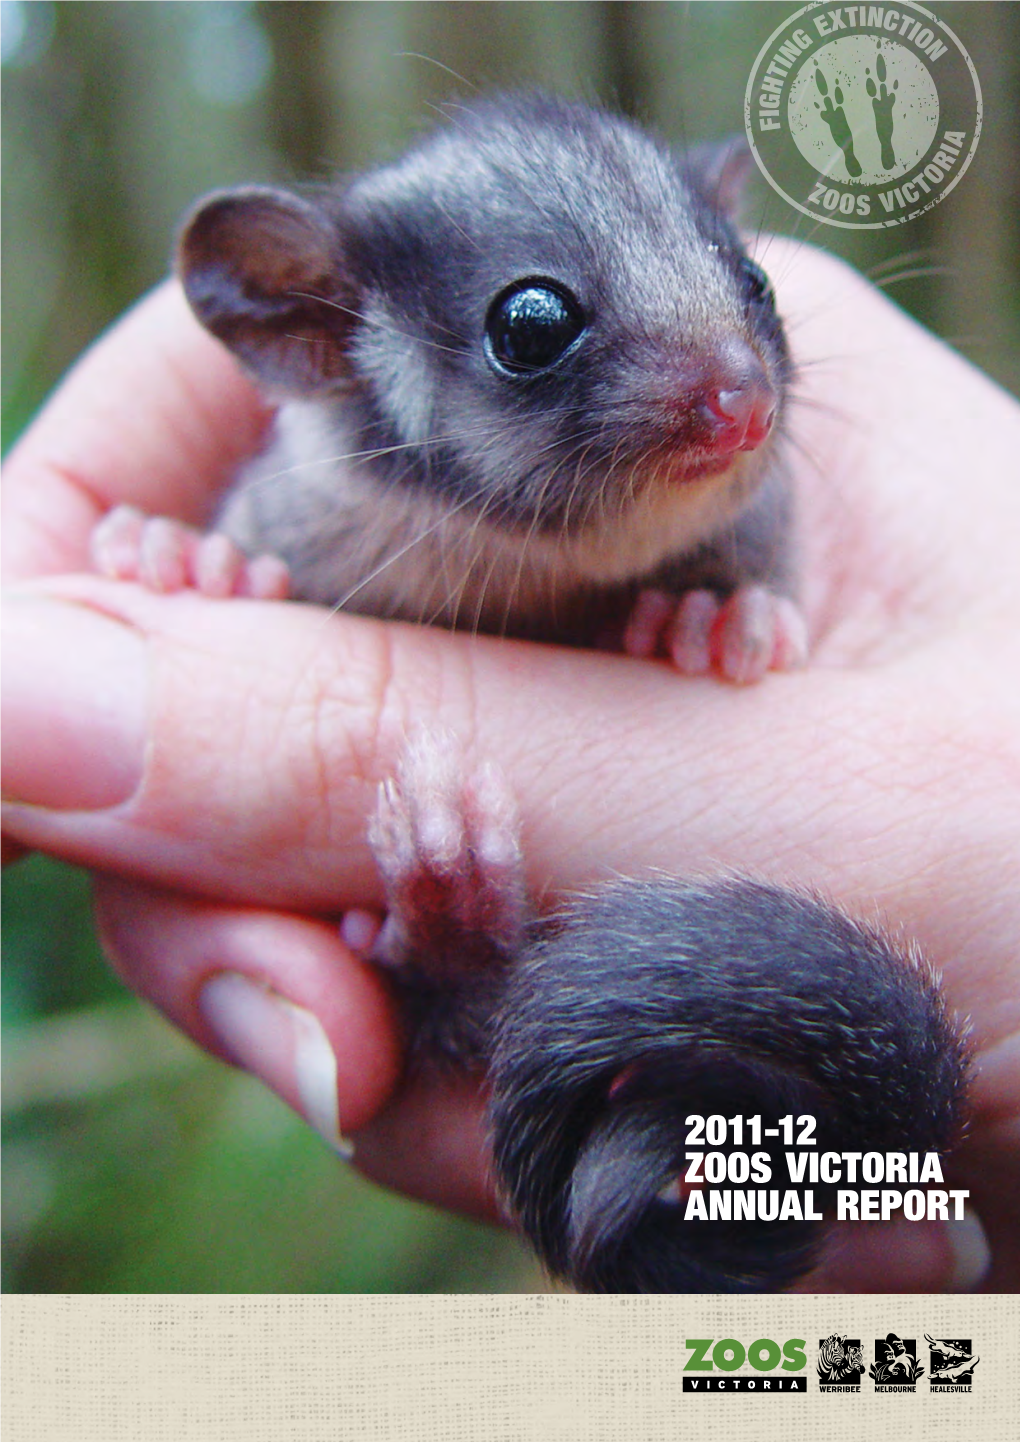 2011-12 Zoos Victoria Annual Report